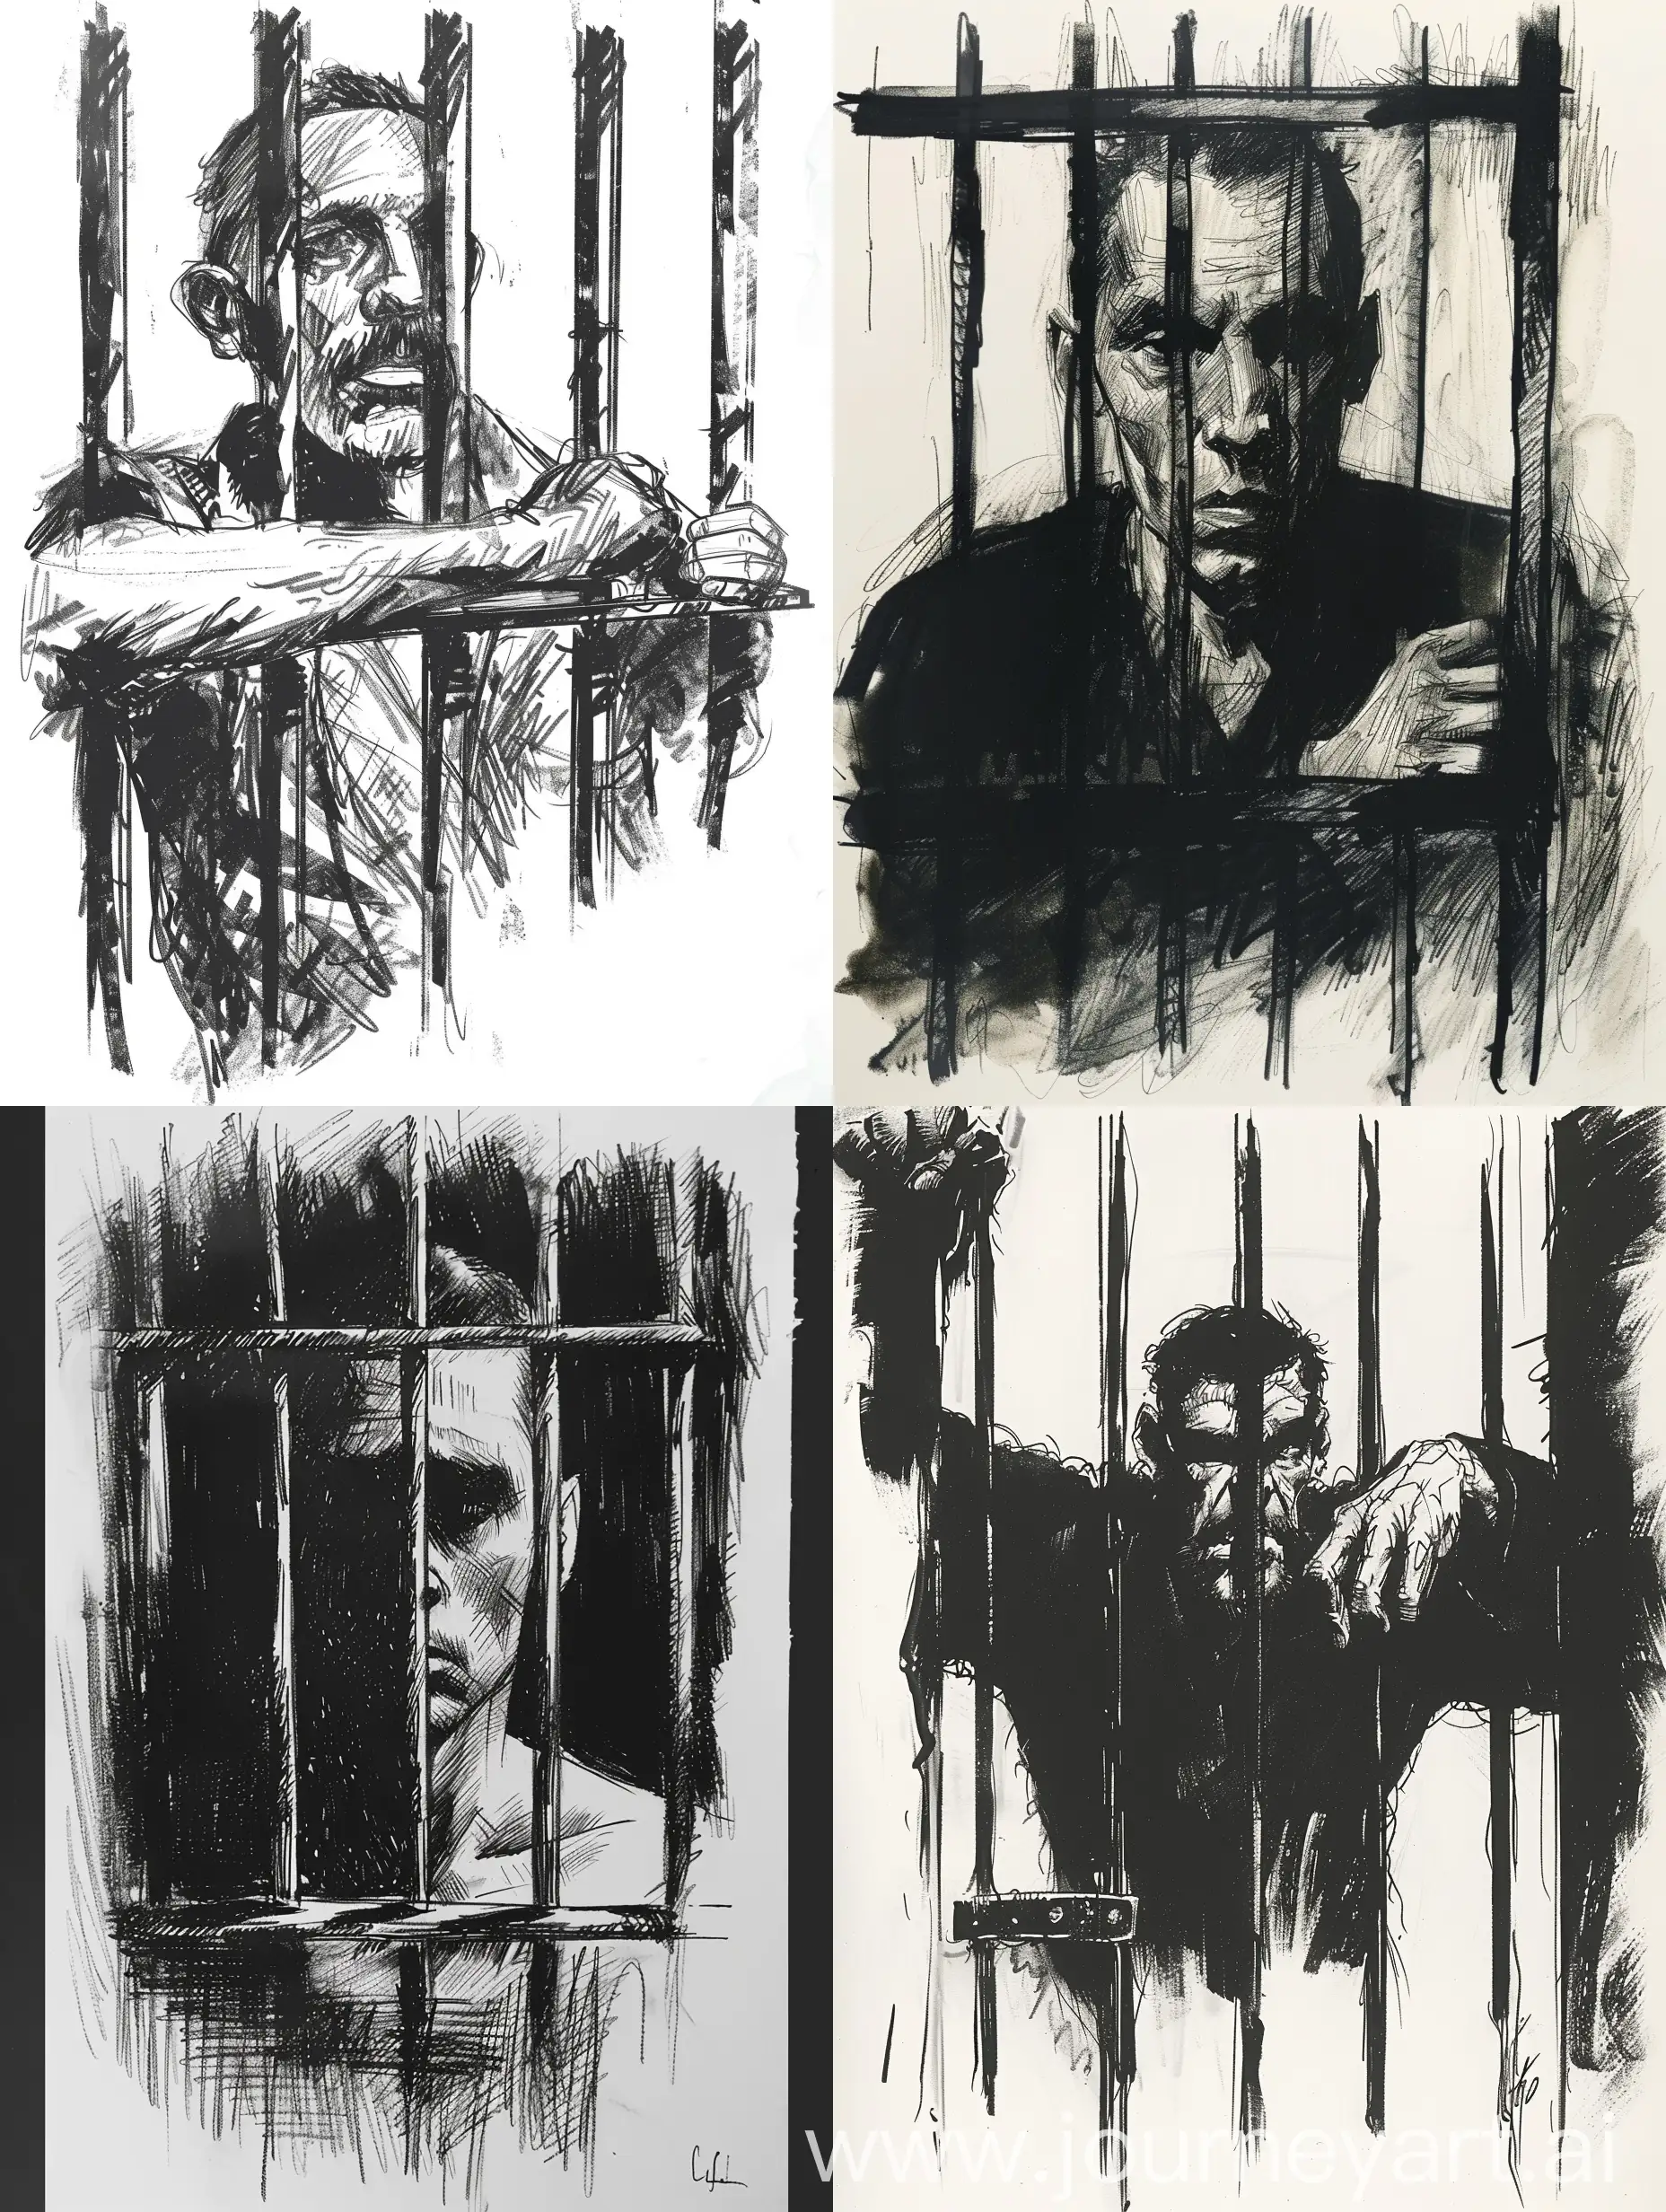 Monochrome-Sketch-of-Imprisoned-Man